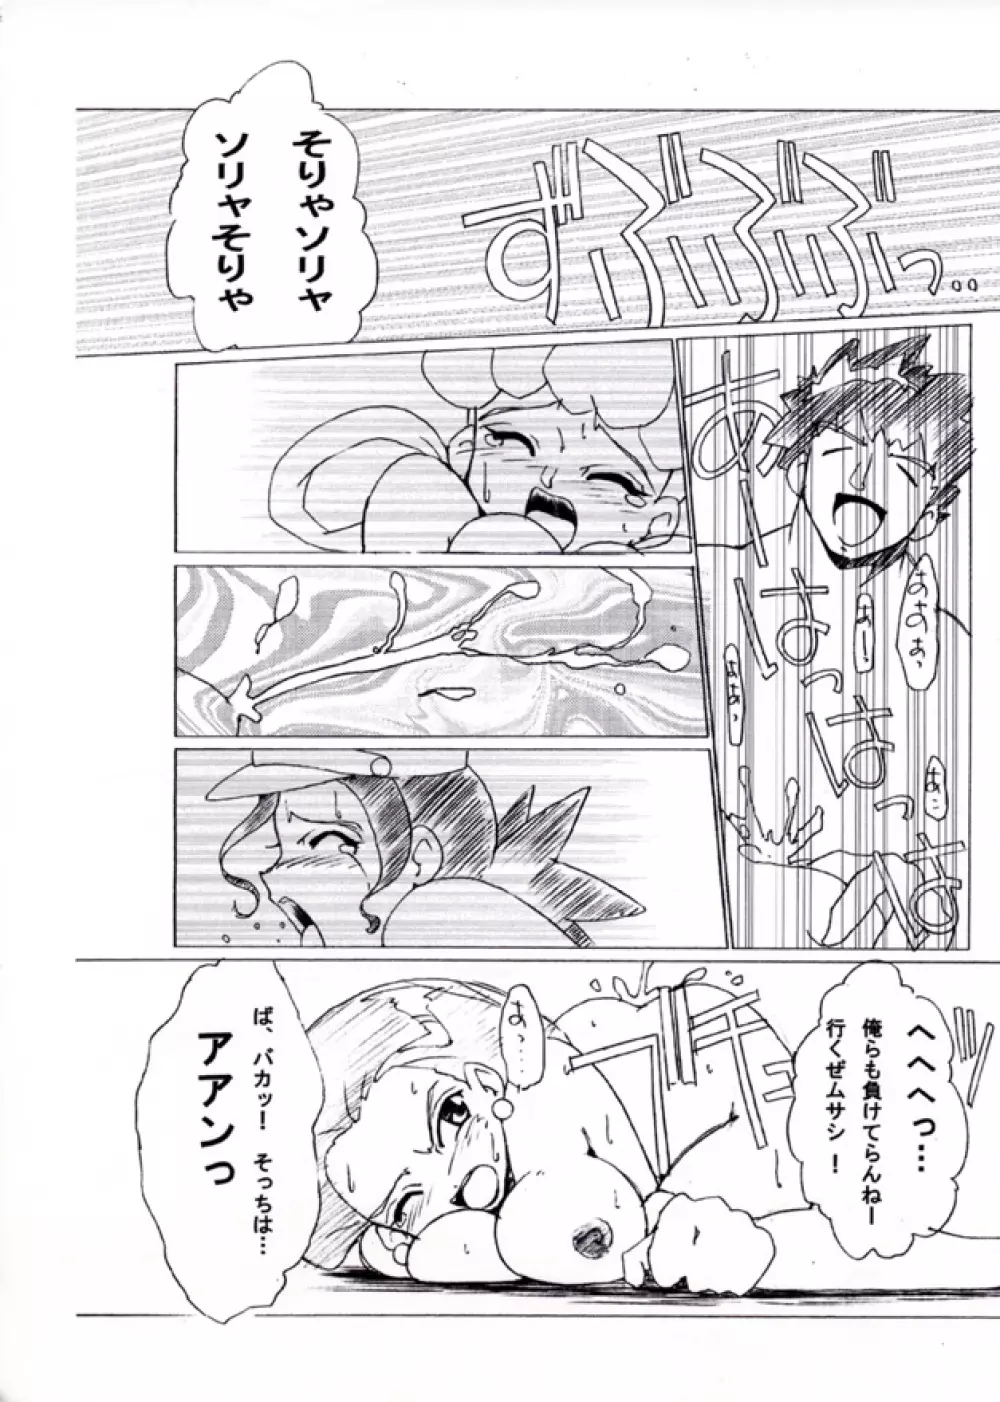 KASUMIX XPLOSION Kasumi Comic part5 - page32